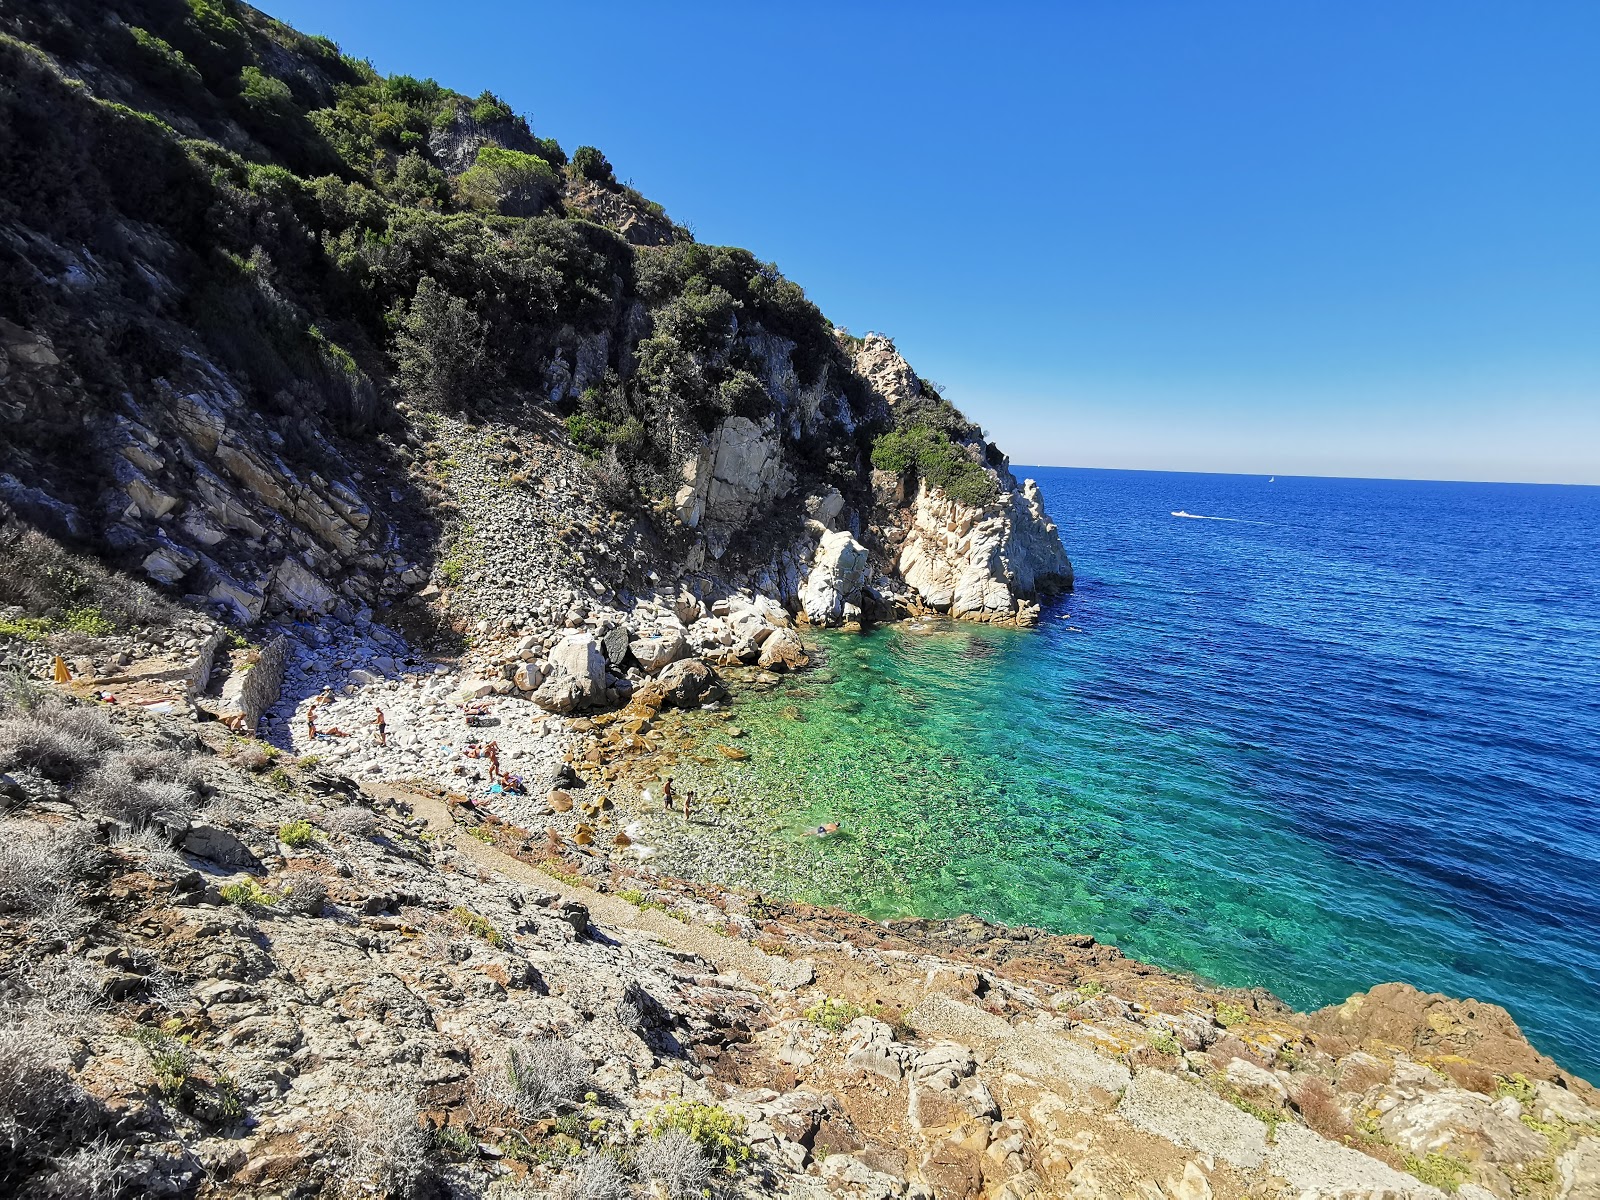 Foto de Spiaggia della Crocetta com água cristalina superfície